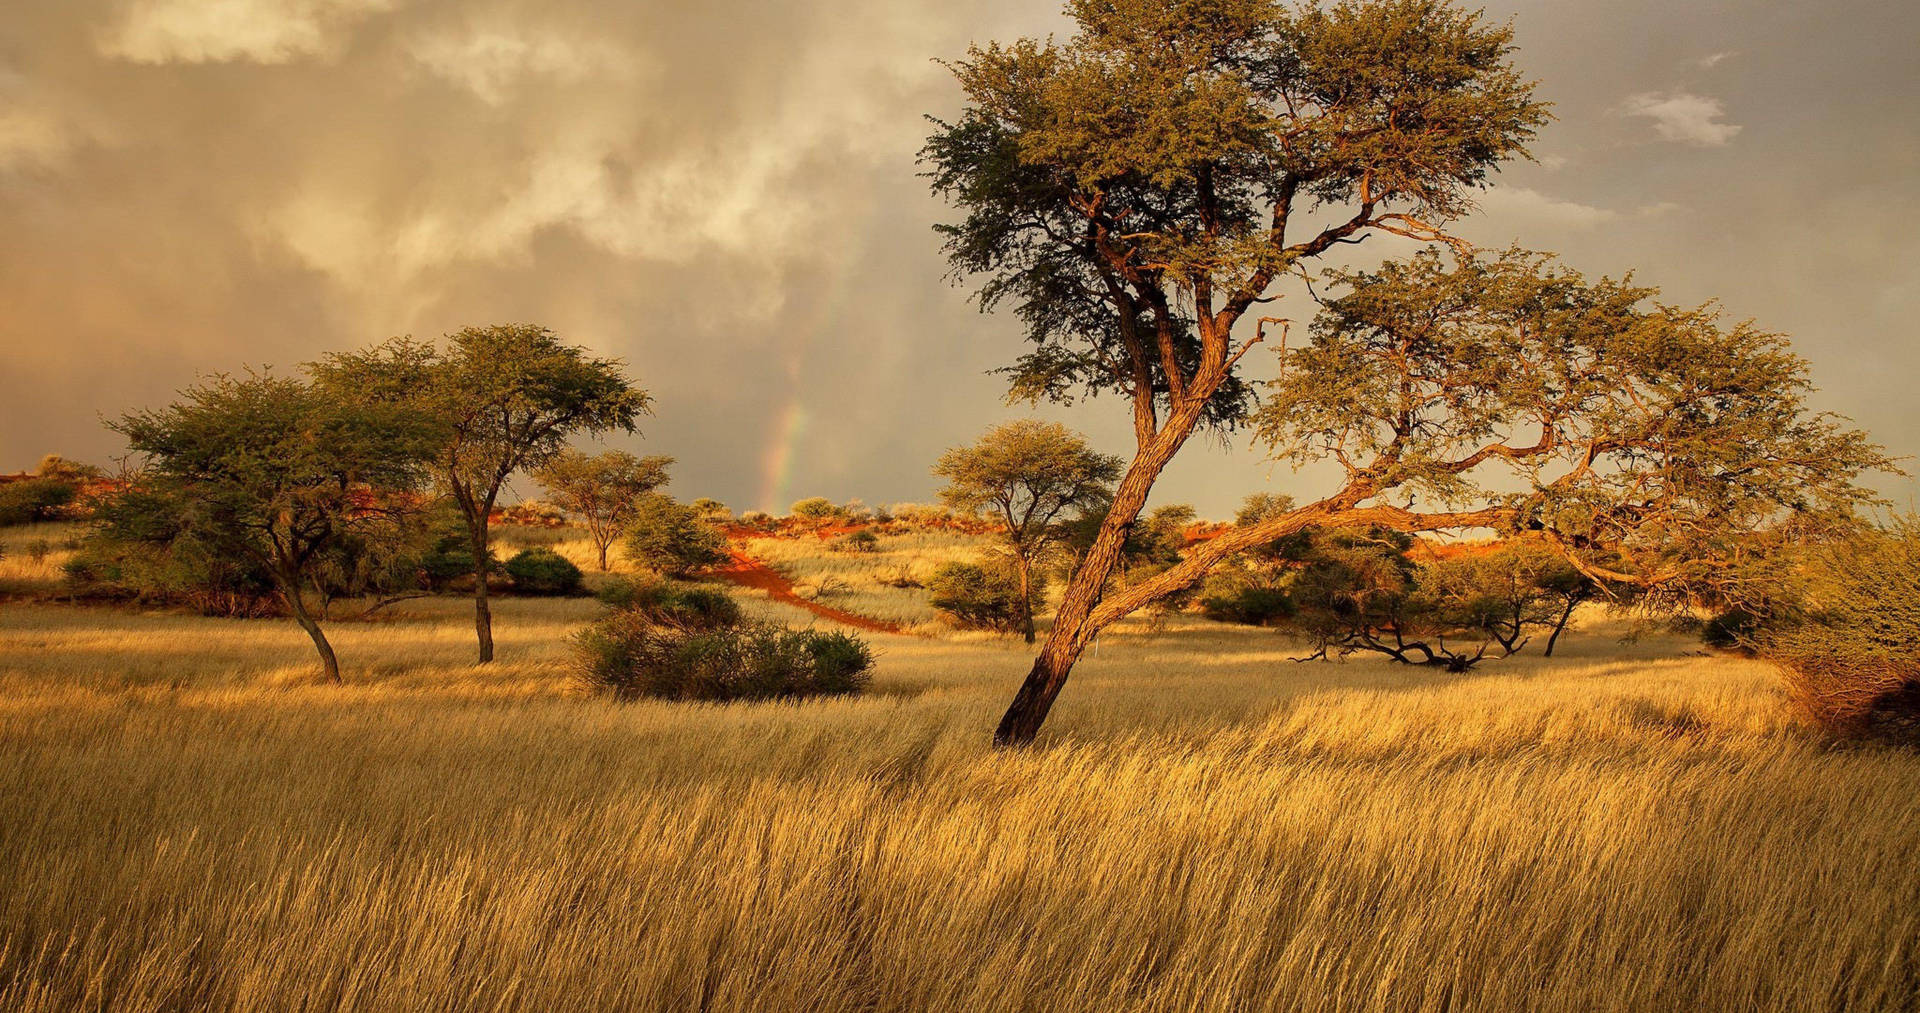 Faraway Rainbow In Africa 4k